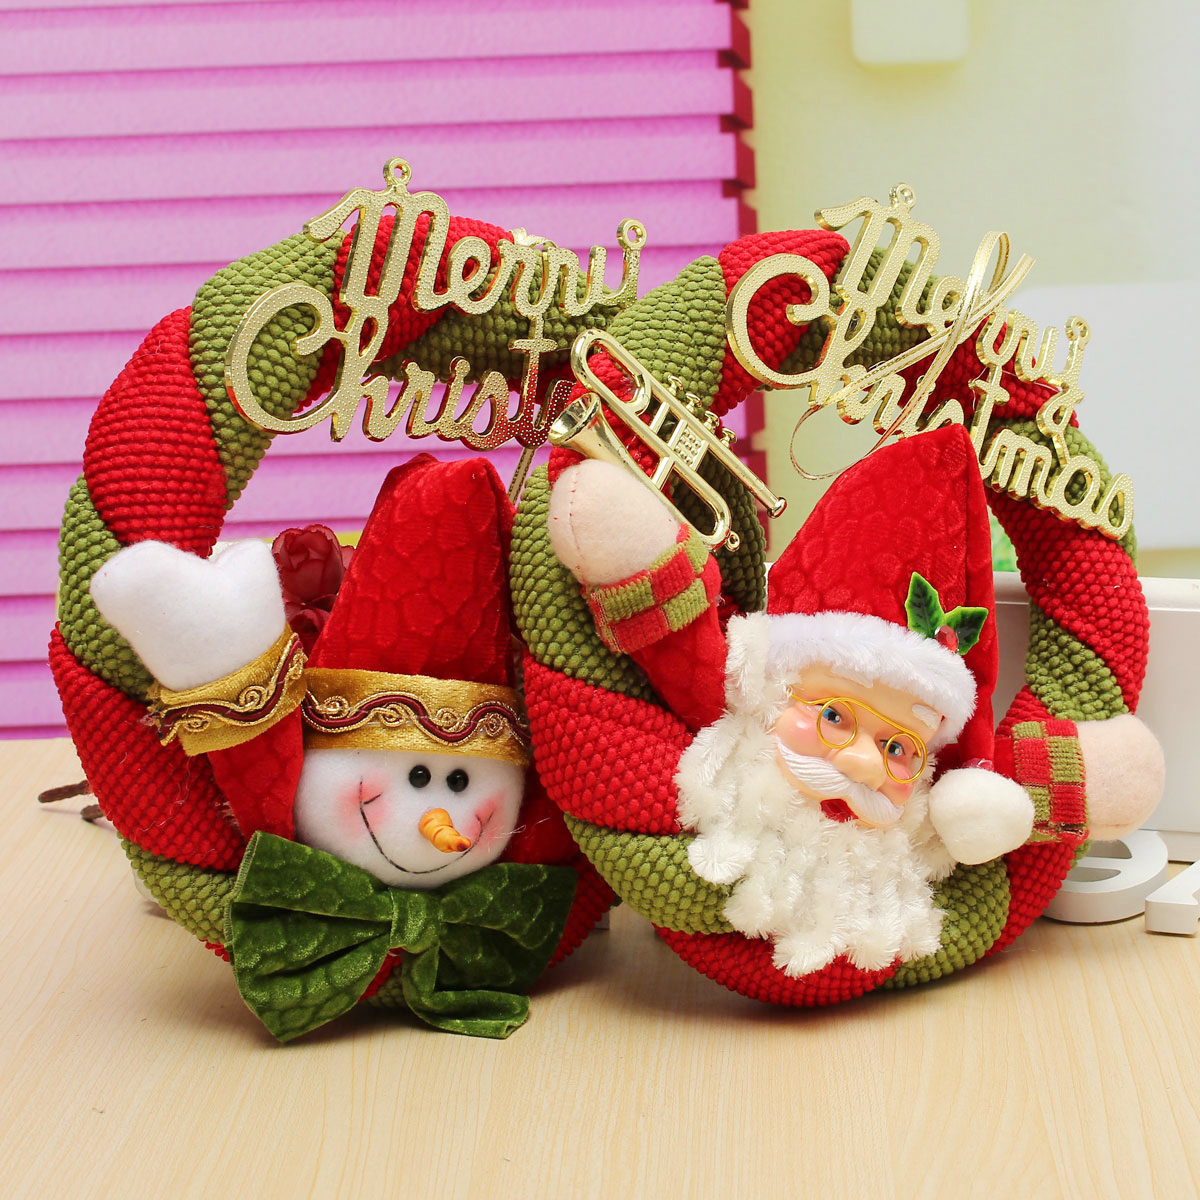 Christmas-Santa-Claus-Ornaments-Festival-Party-Xmas-Tree-Hanging-Decoration-1002250-1